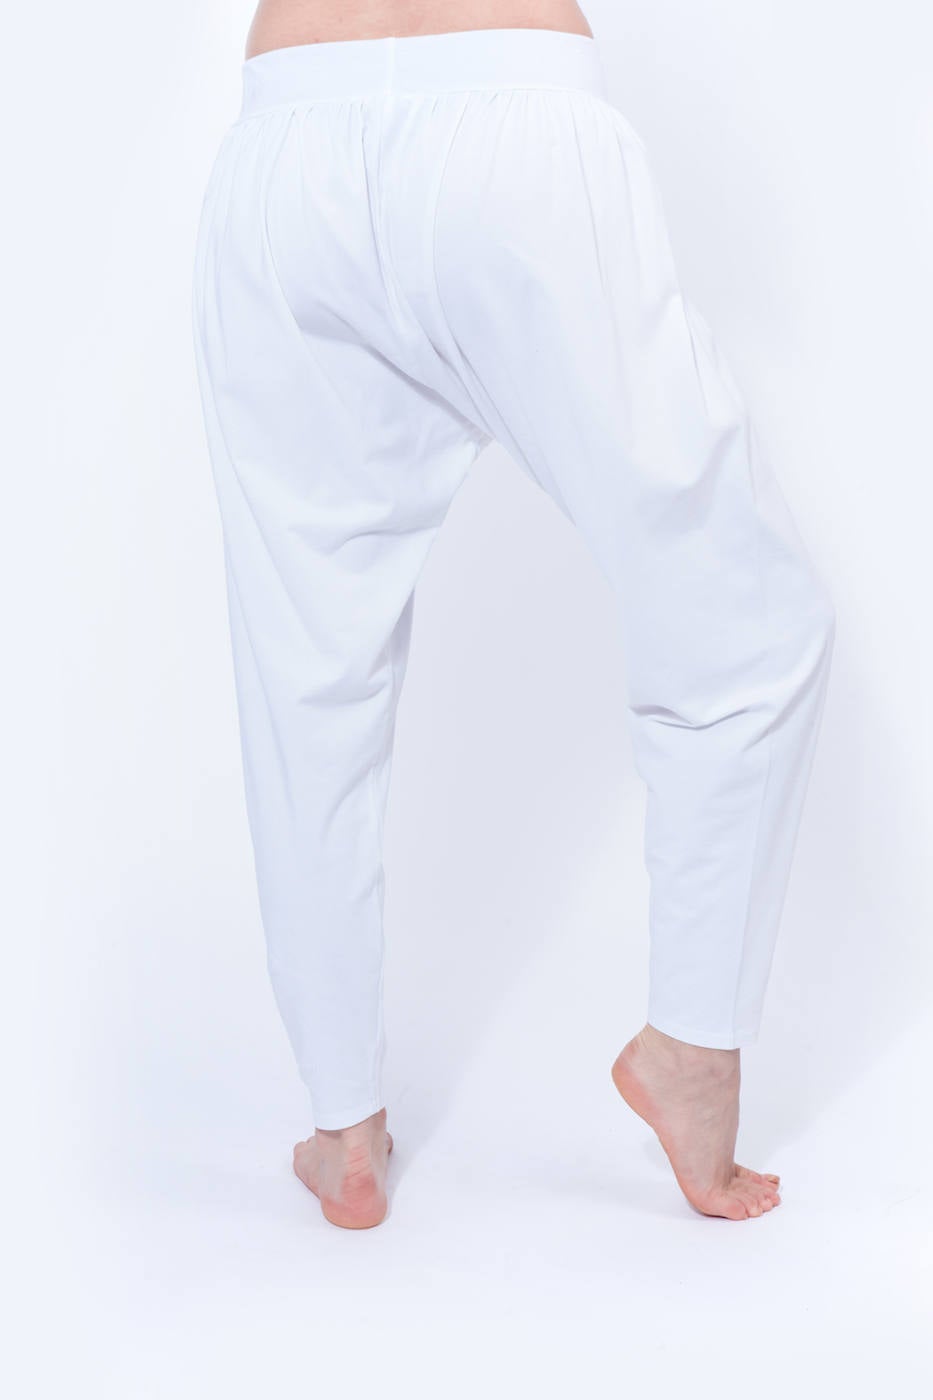 Women's Loungewear Bottoms, White Cotton Kundalini Yoga Pant